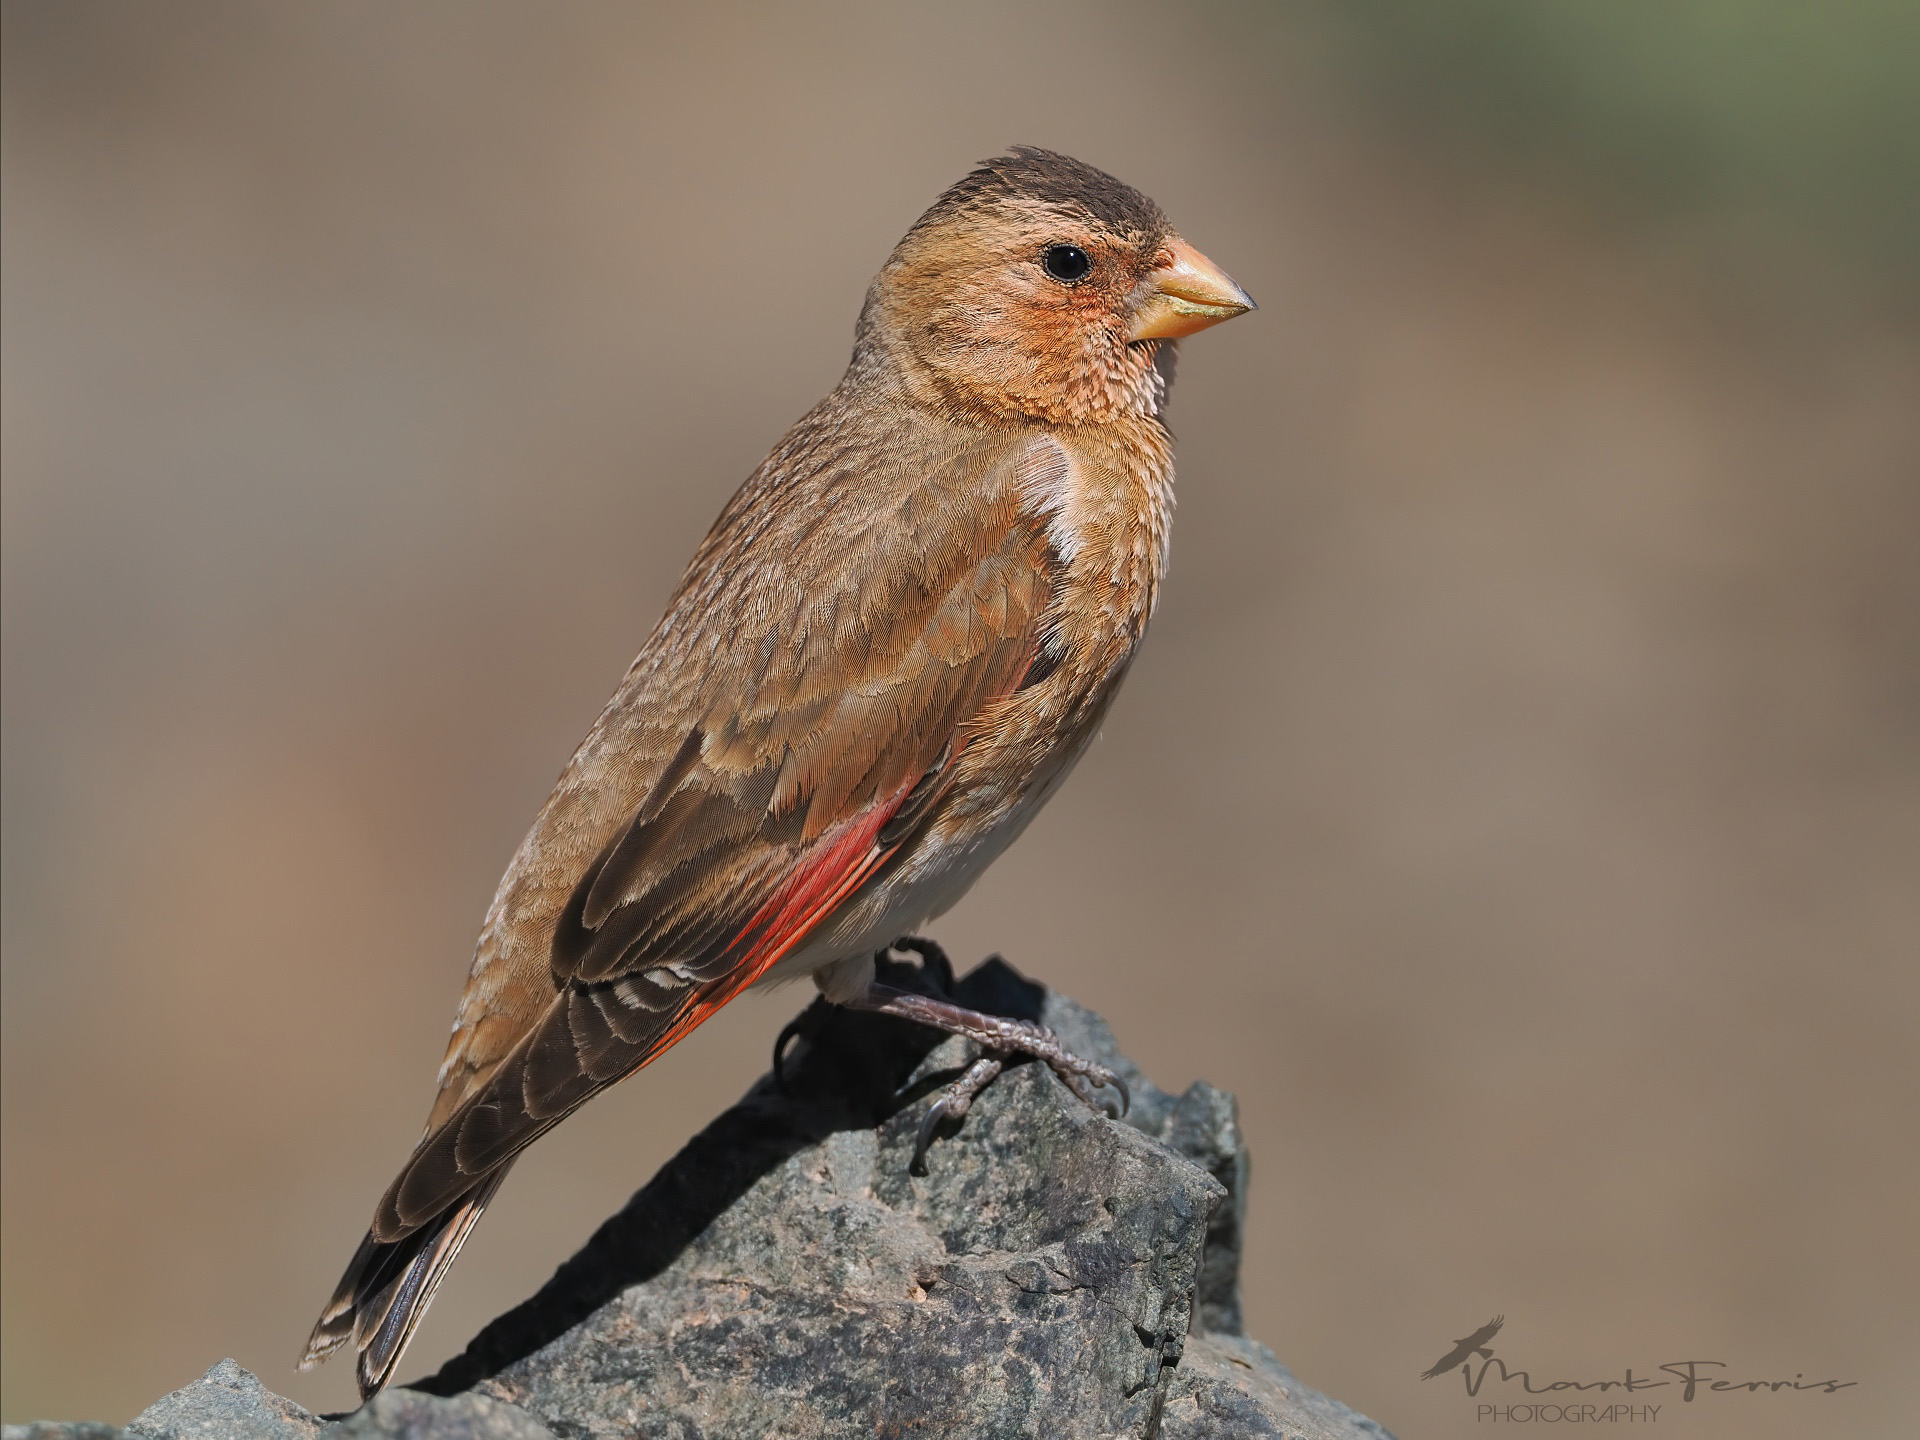 African Crimson-winged Finch by Mark ferris - BirdGuides